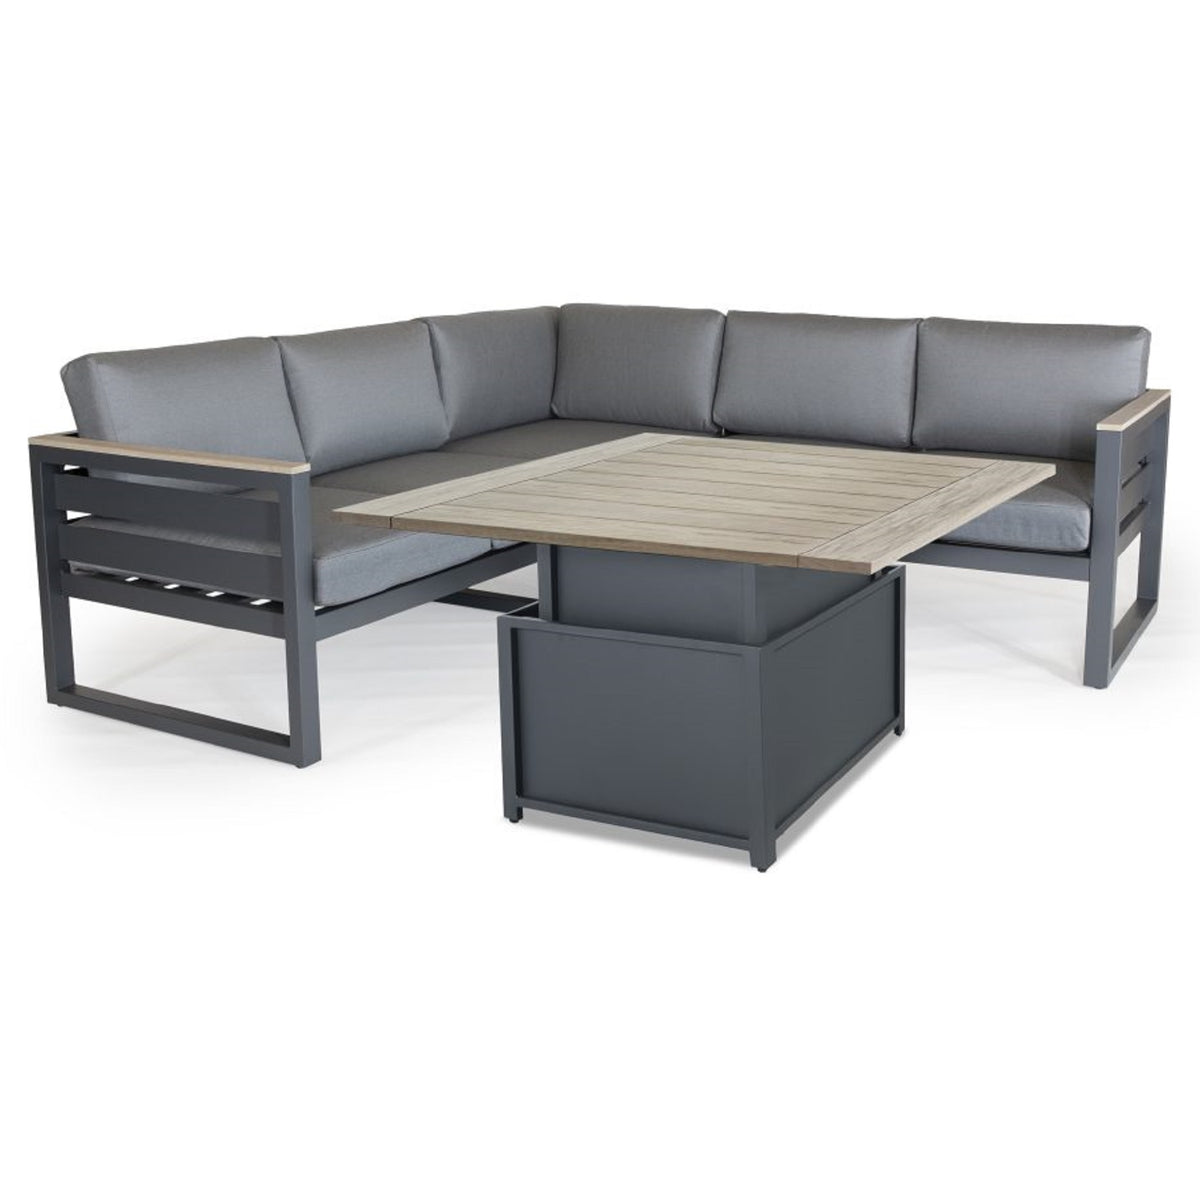 Kettler Elba Signature Grande Corner Sofa Set with High Low Adjustable Teak Slat Top Table